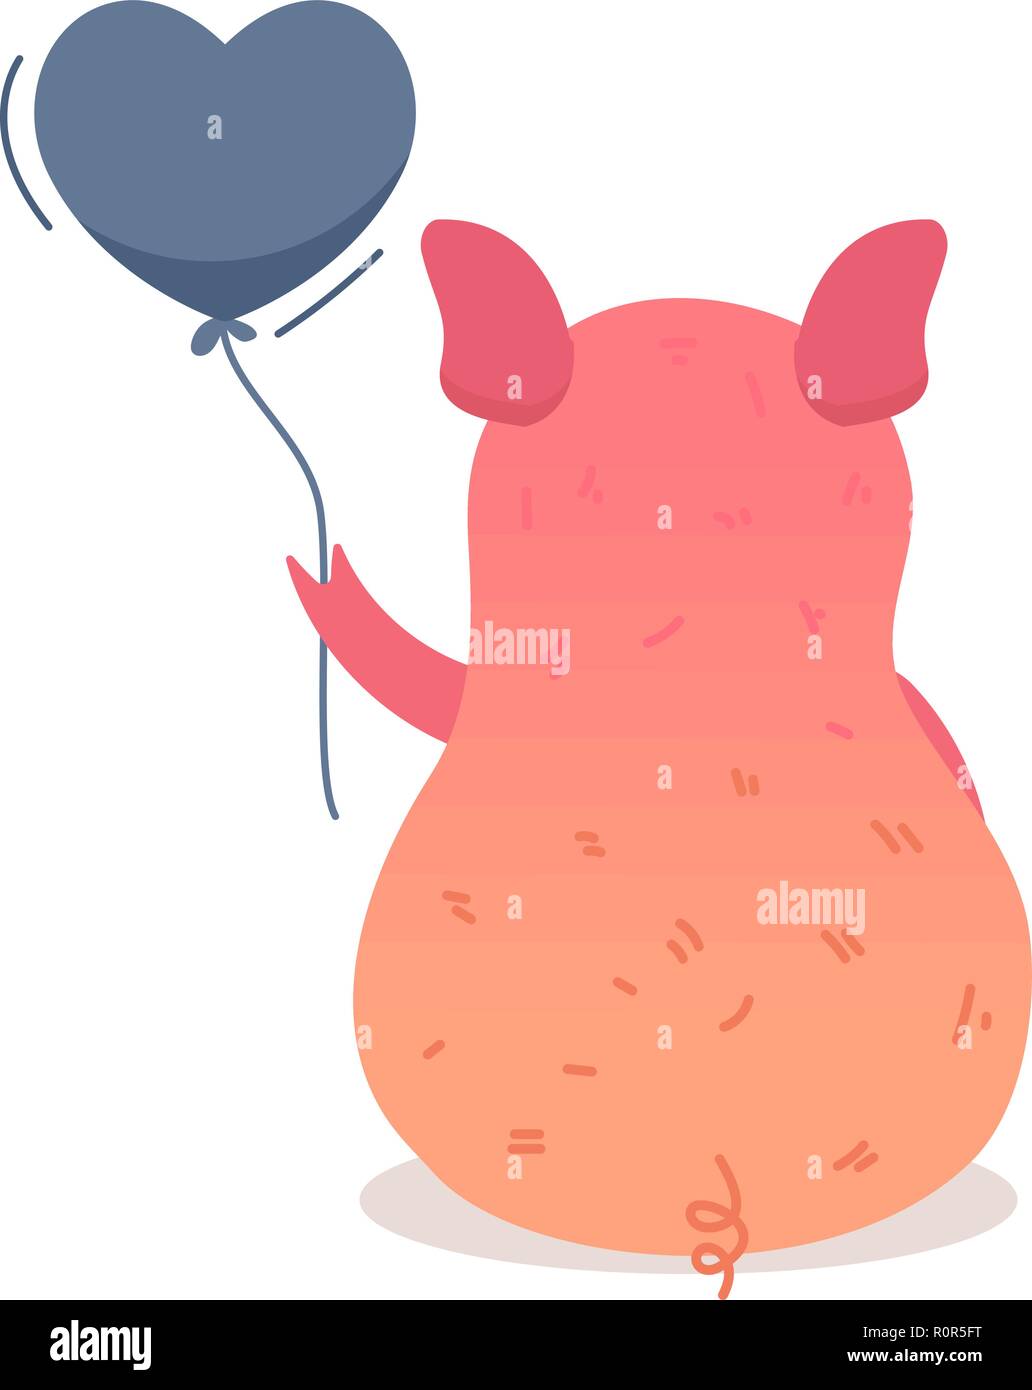 Cartoon pig holding balloon. Pig icon - vector illustration Stock Vector